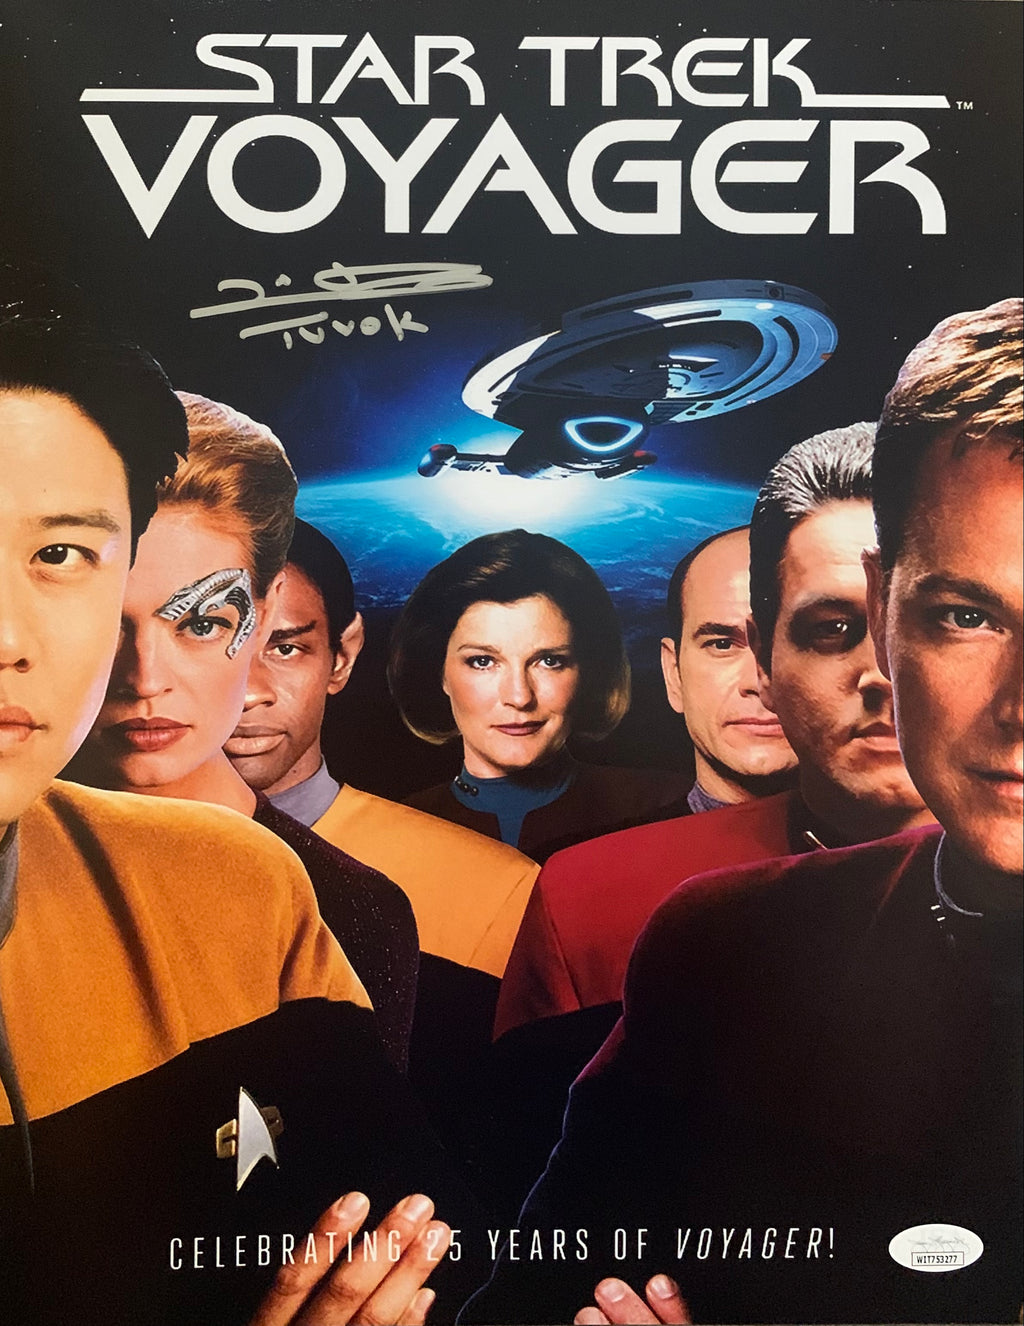 Tim Russ autographed signed inscribed 11x14 photo JSA Star Trek Voyager Tuvok